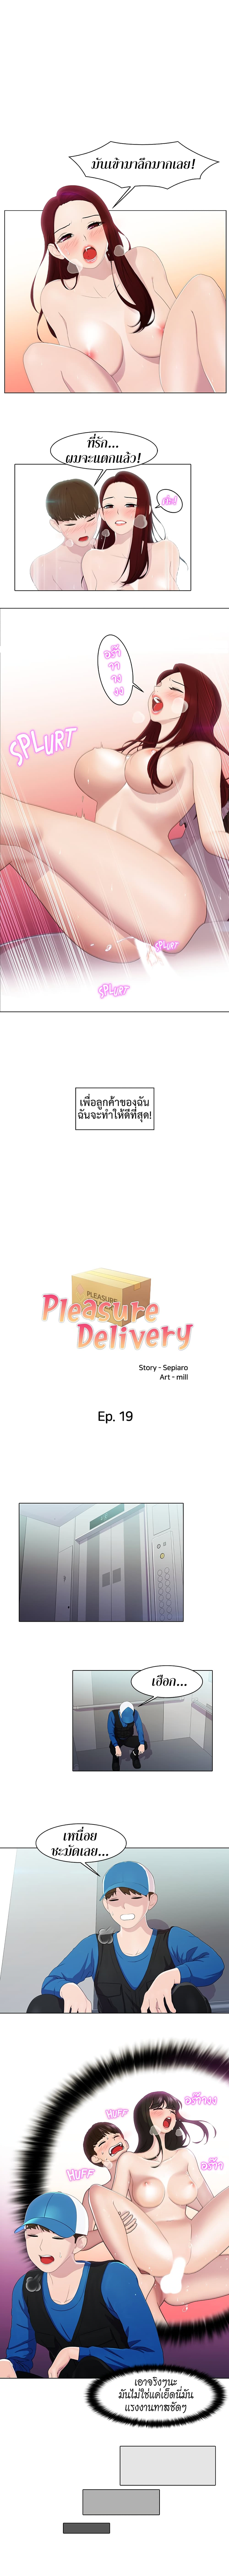 Pleasure Delivery 19-19